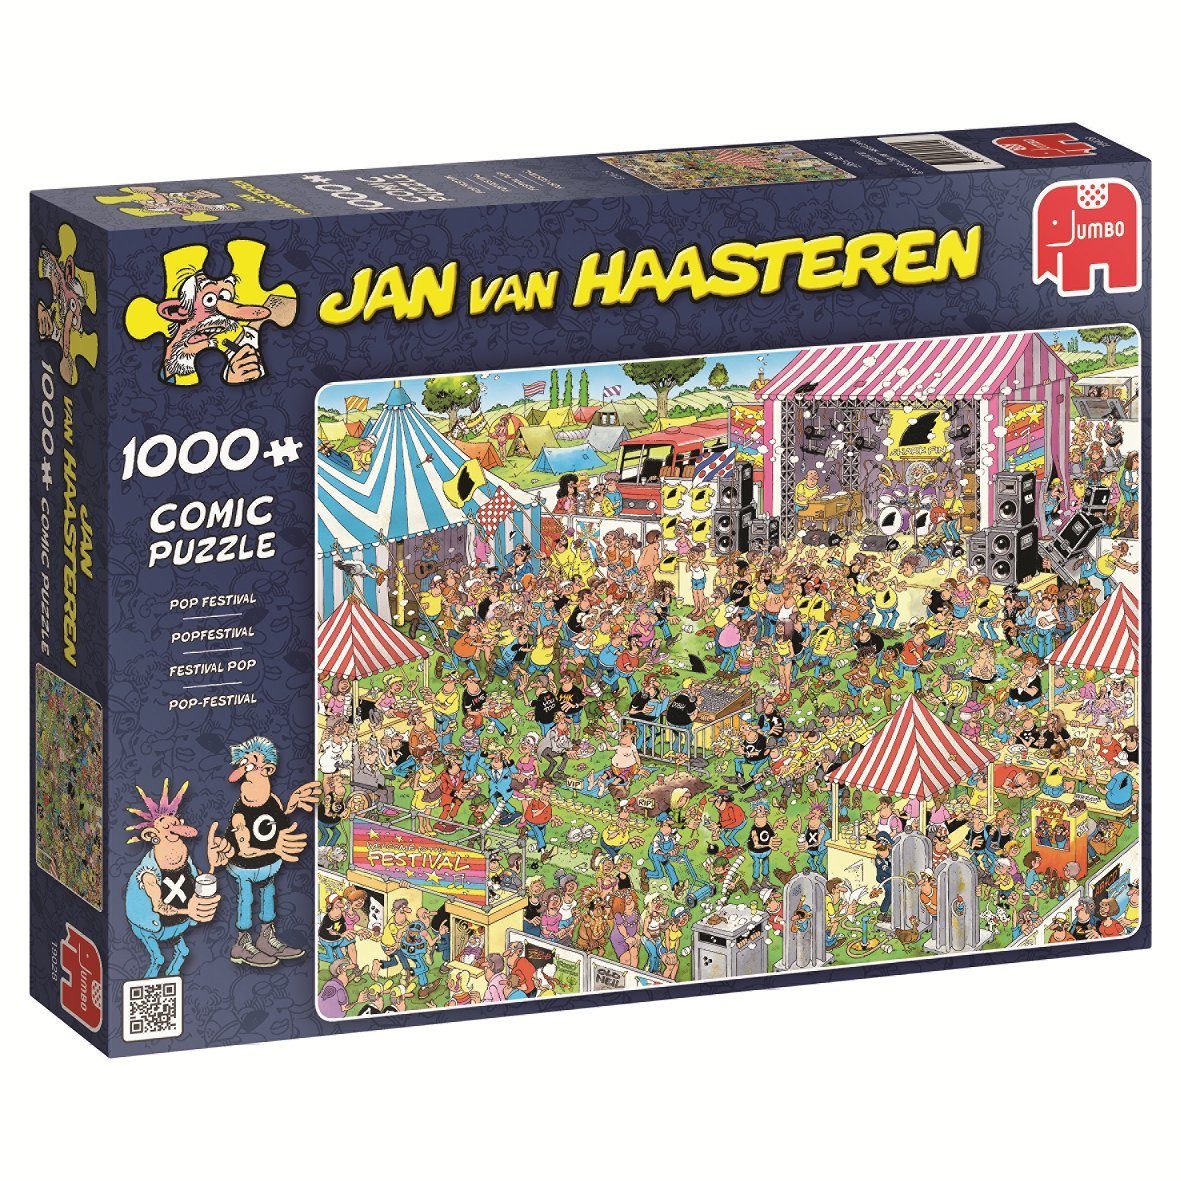 Puzzle 19028 Jan van Haasteren Pop-Festival, 1000 Puzzleteile